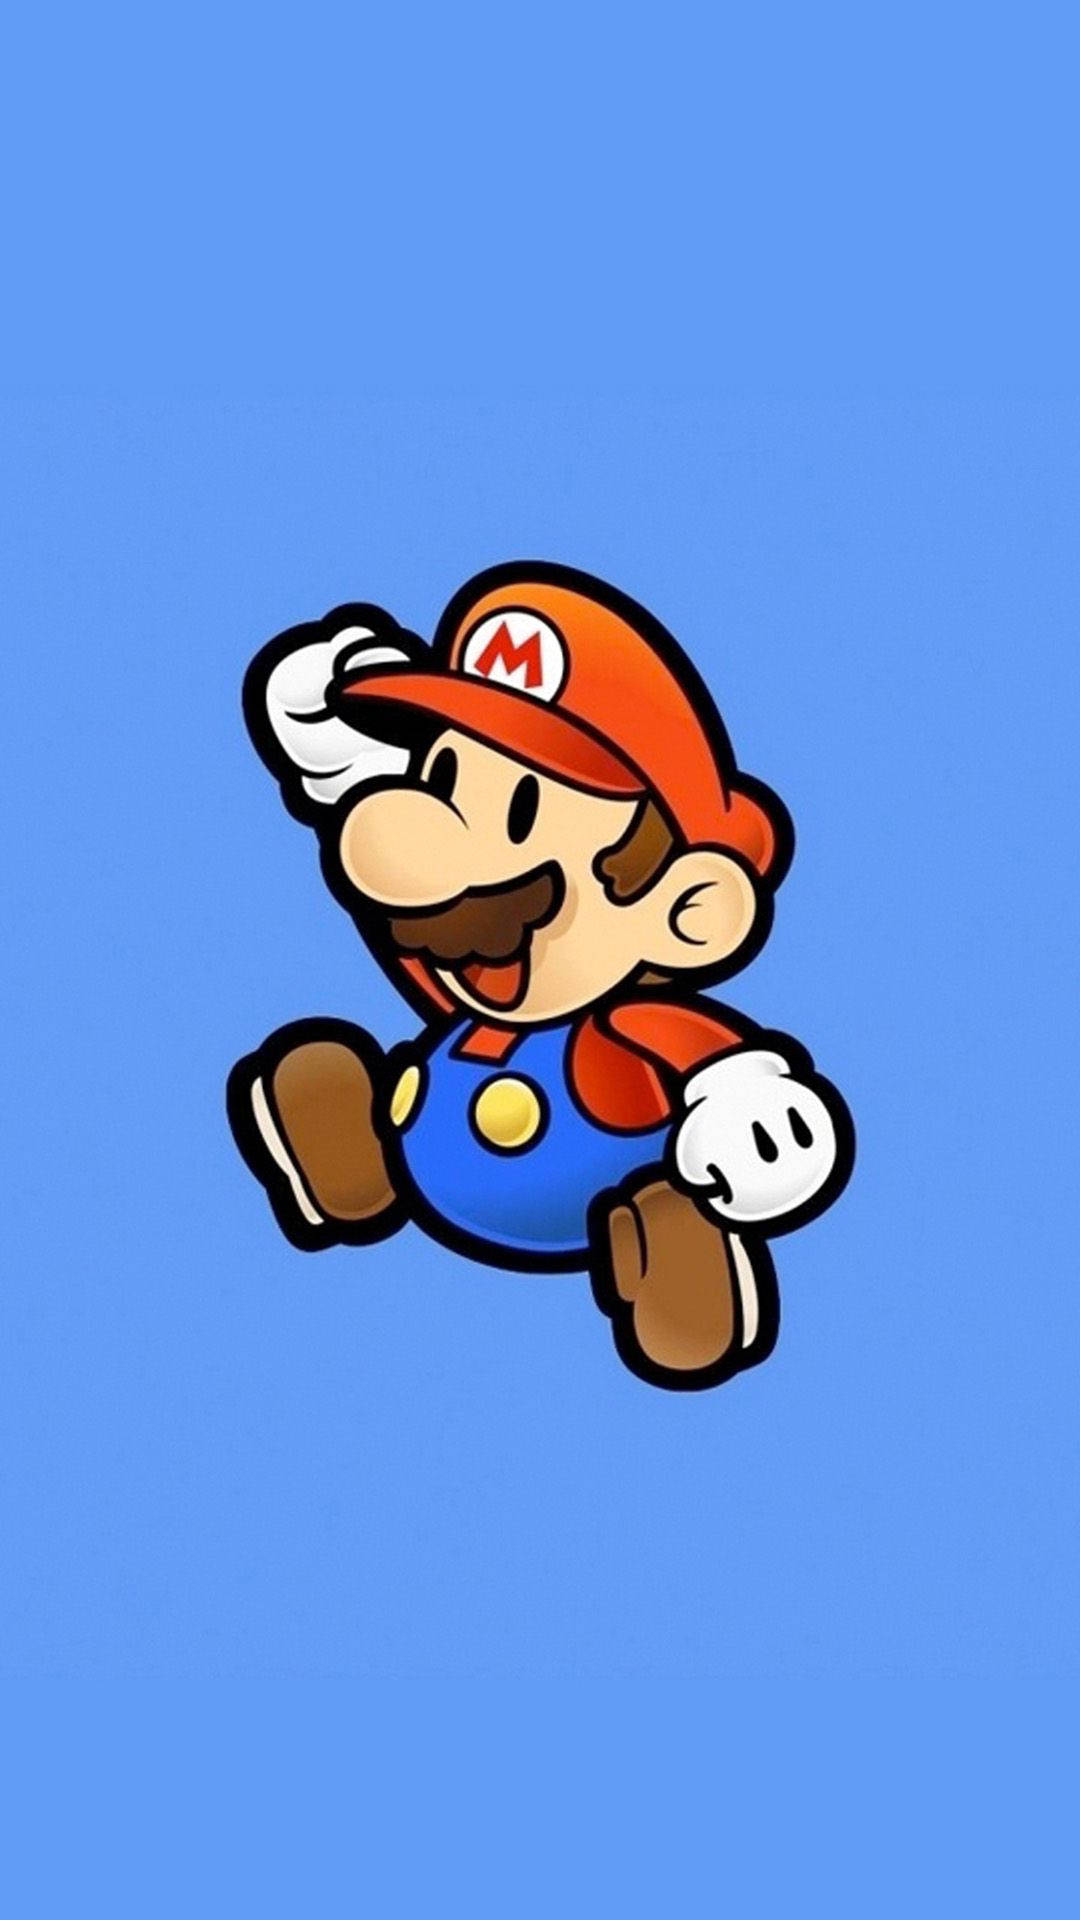 Super Mario On Blue Background Wallpaper